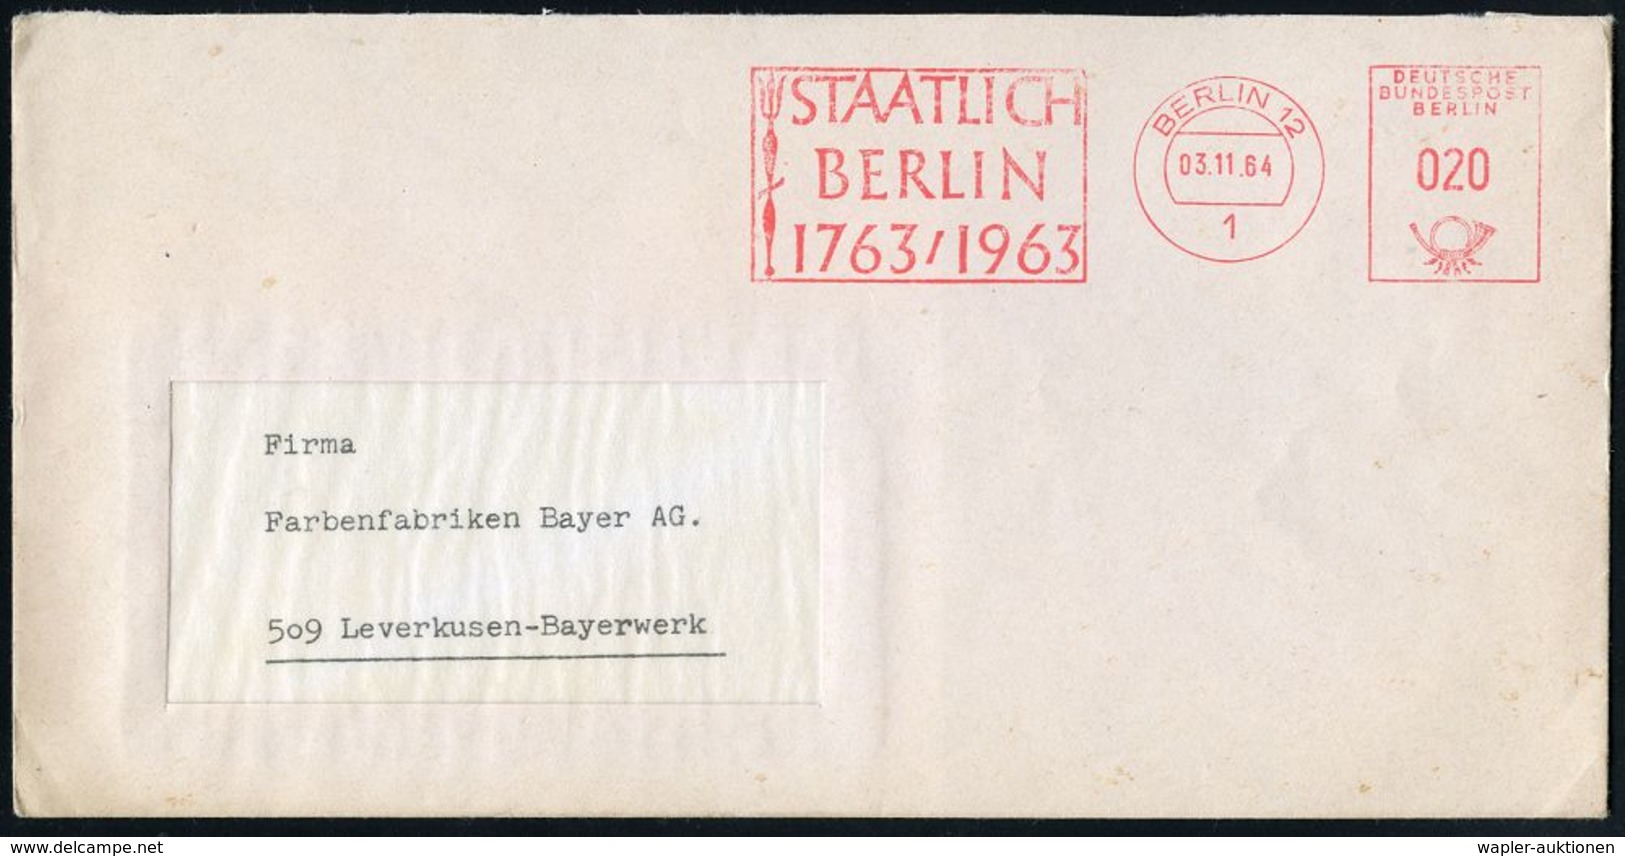 KERAMIK / PORZELLAN / MANUFAKTUREN : 1 BERLIN 12/ STAATLICH/ BERLIN/ 1763-1963 1964 (Nov.) Seltener Jubil.-AFS (Signet)  - Porcellana